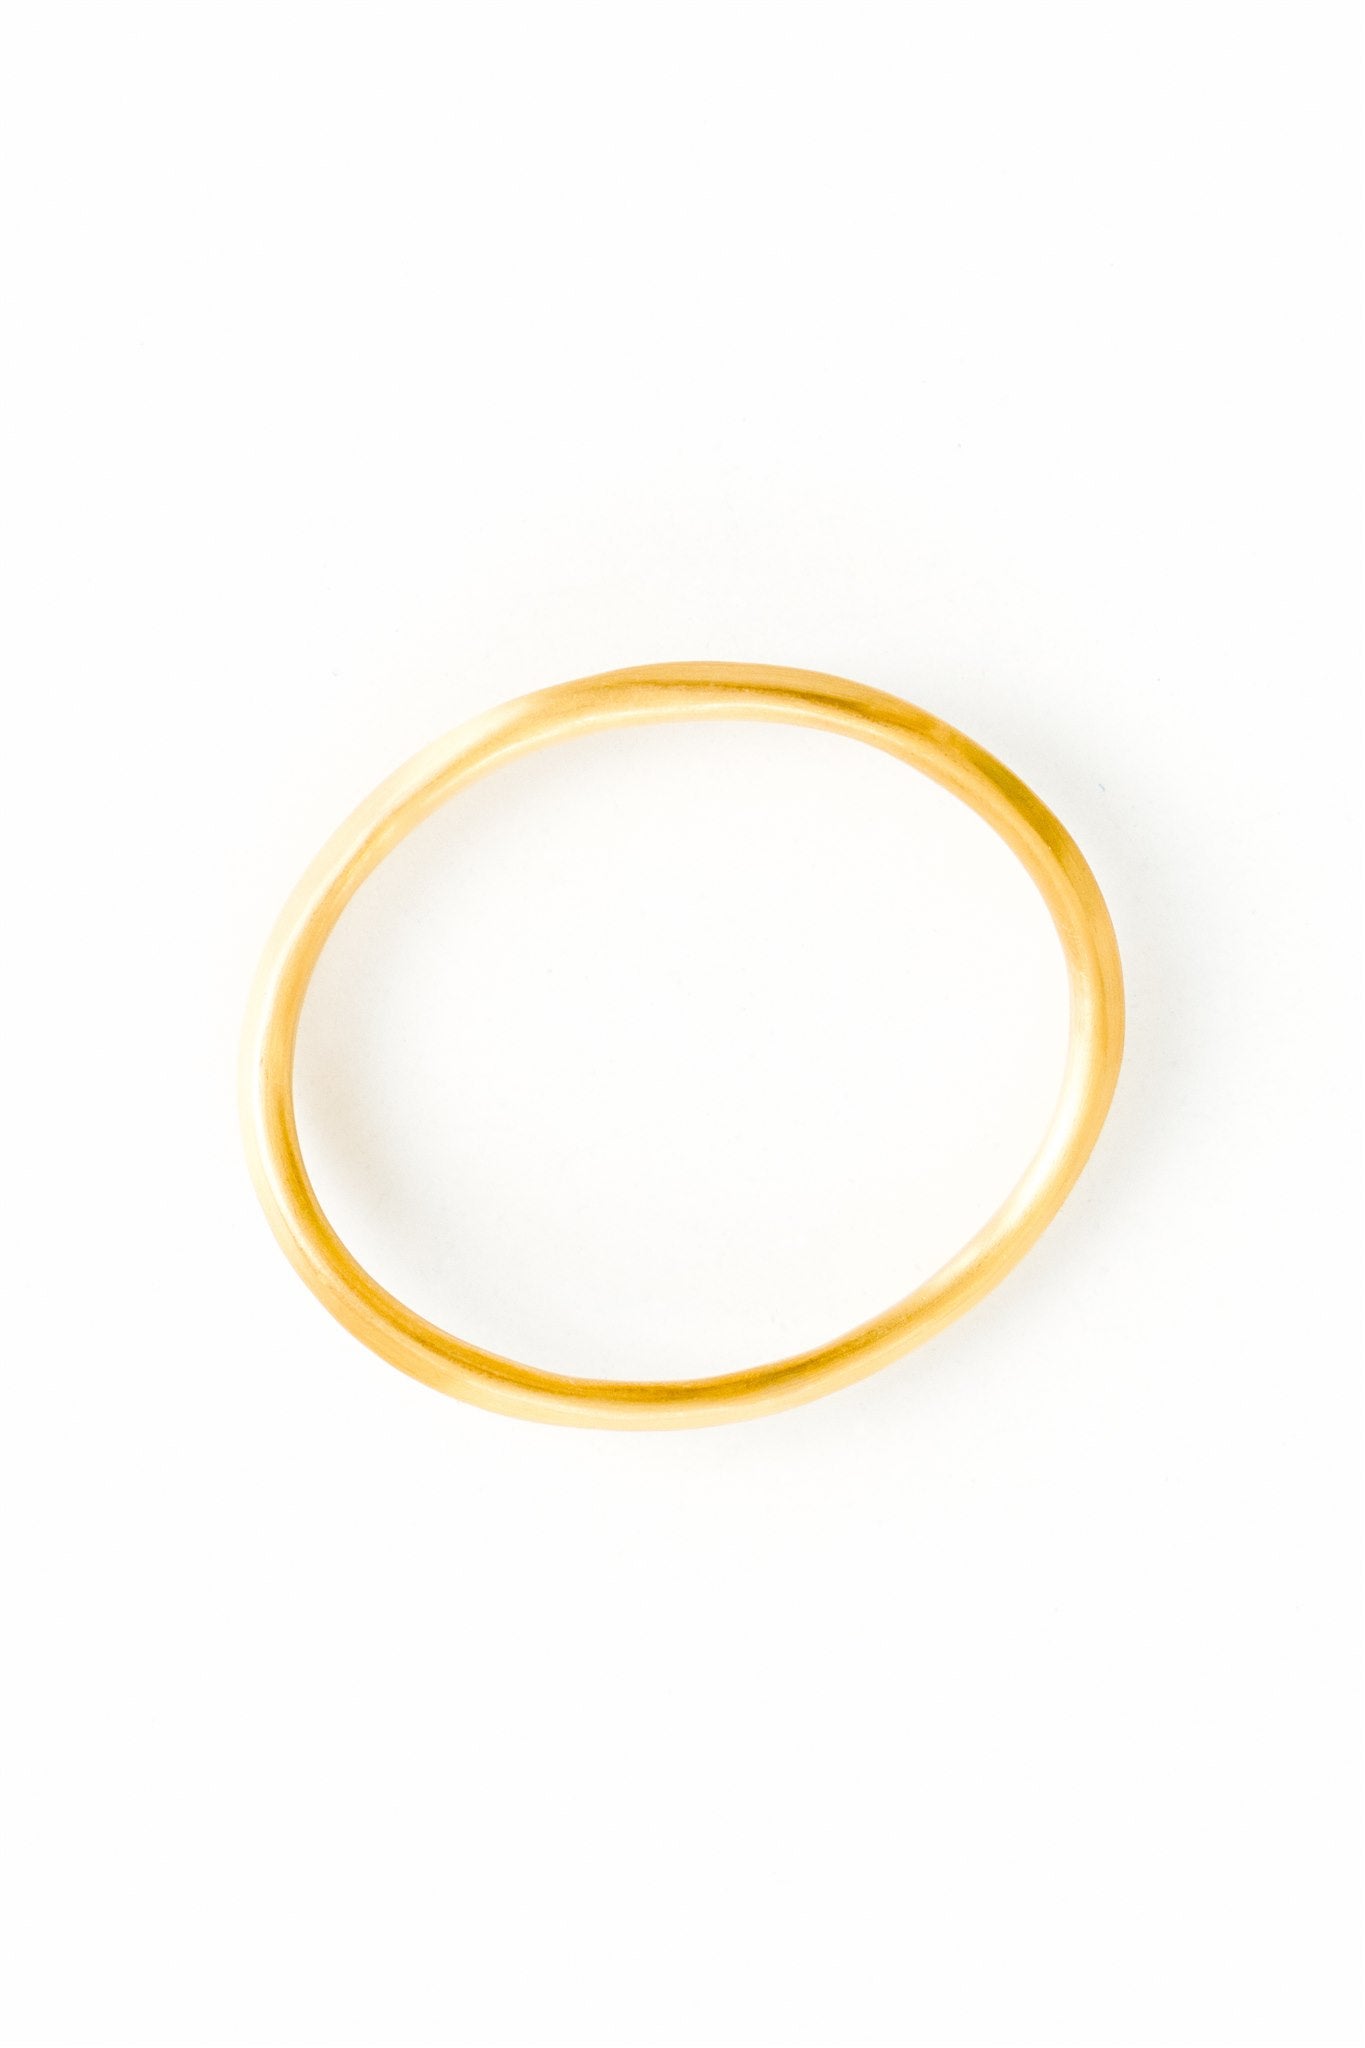 22K Yellow Gold Irregular Oval Bangle 19cm